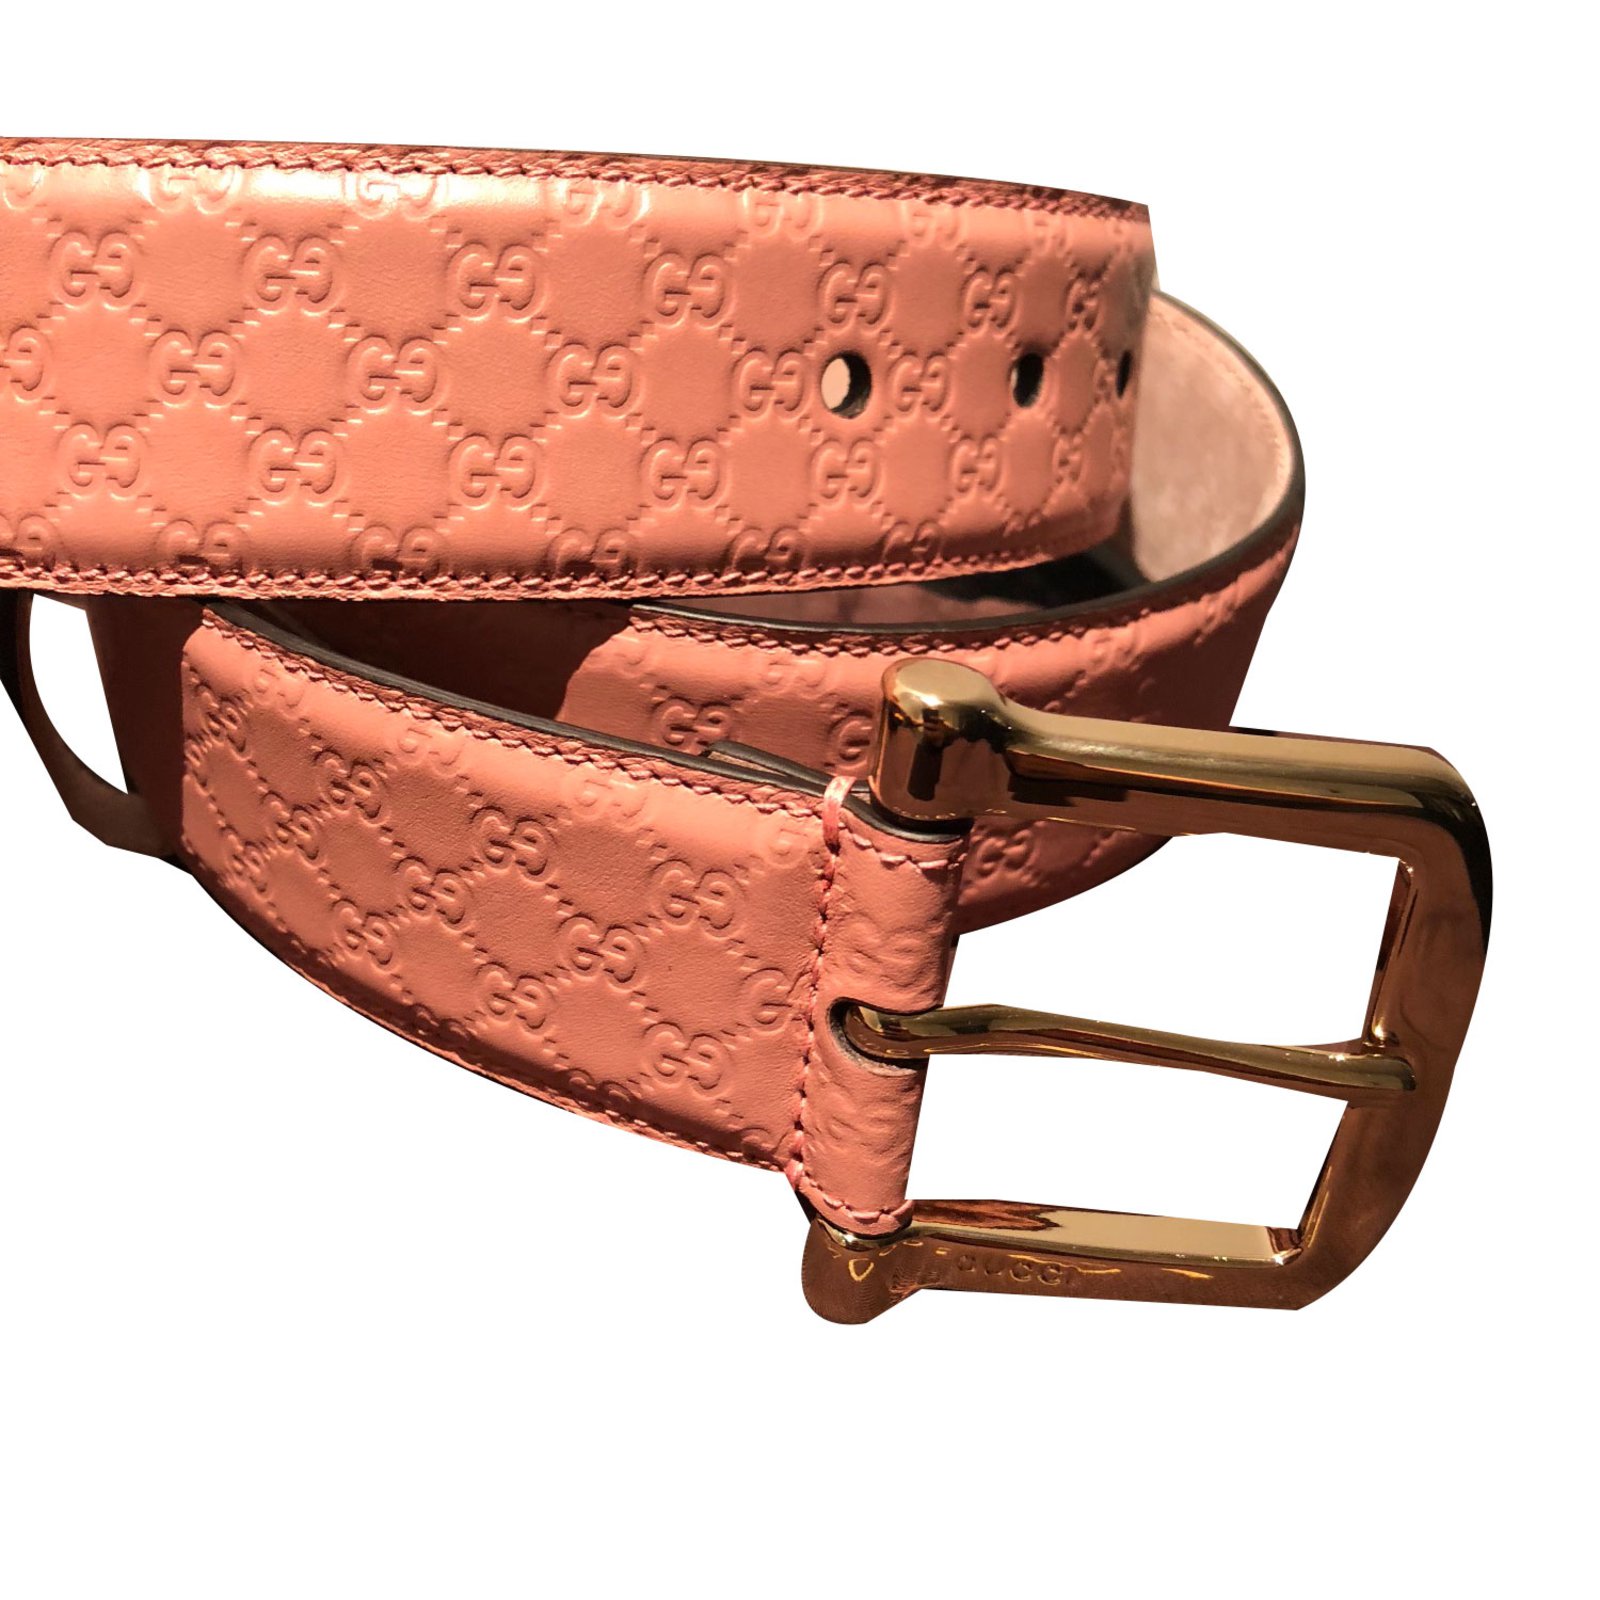 pink gucci belts